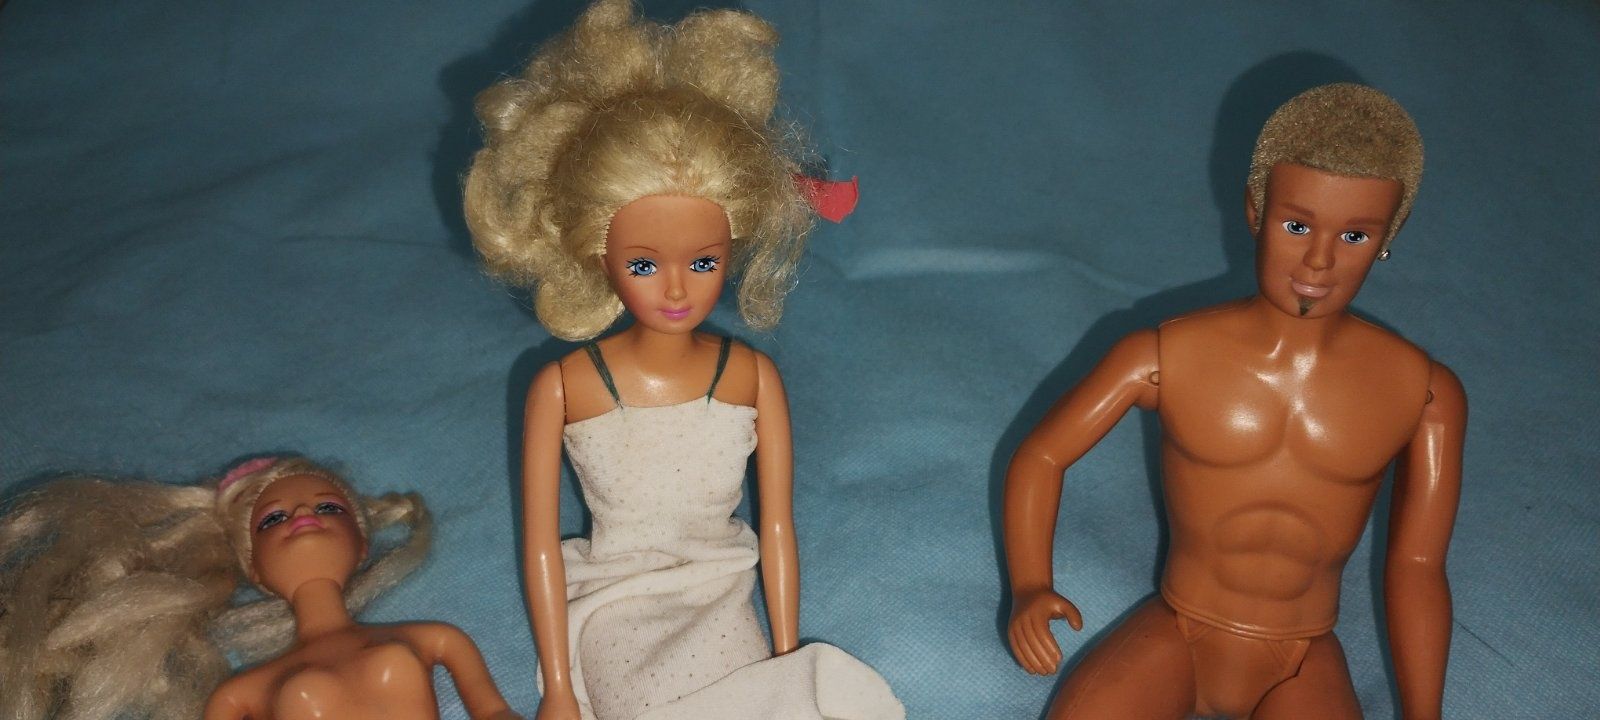 2 ляльки Барбі і Кен